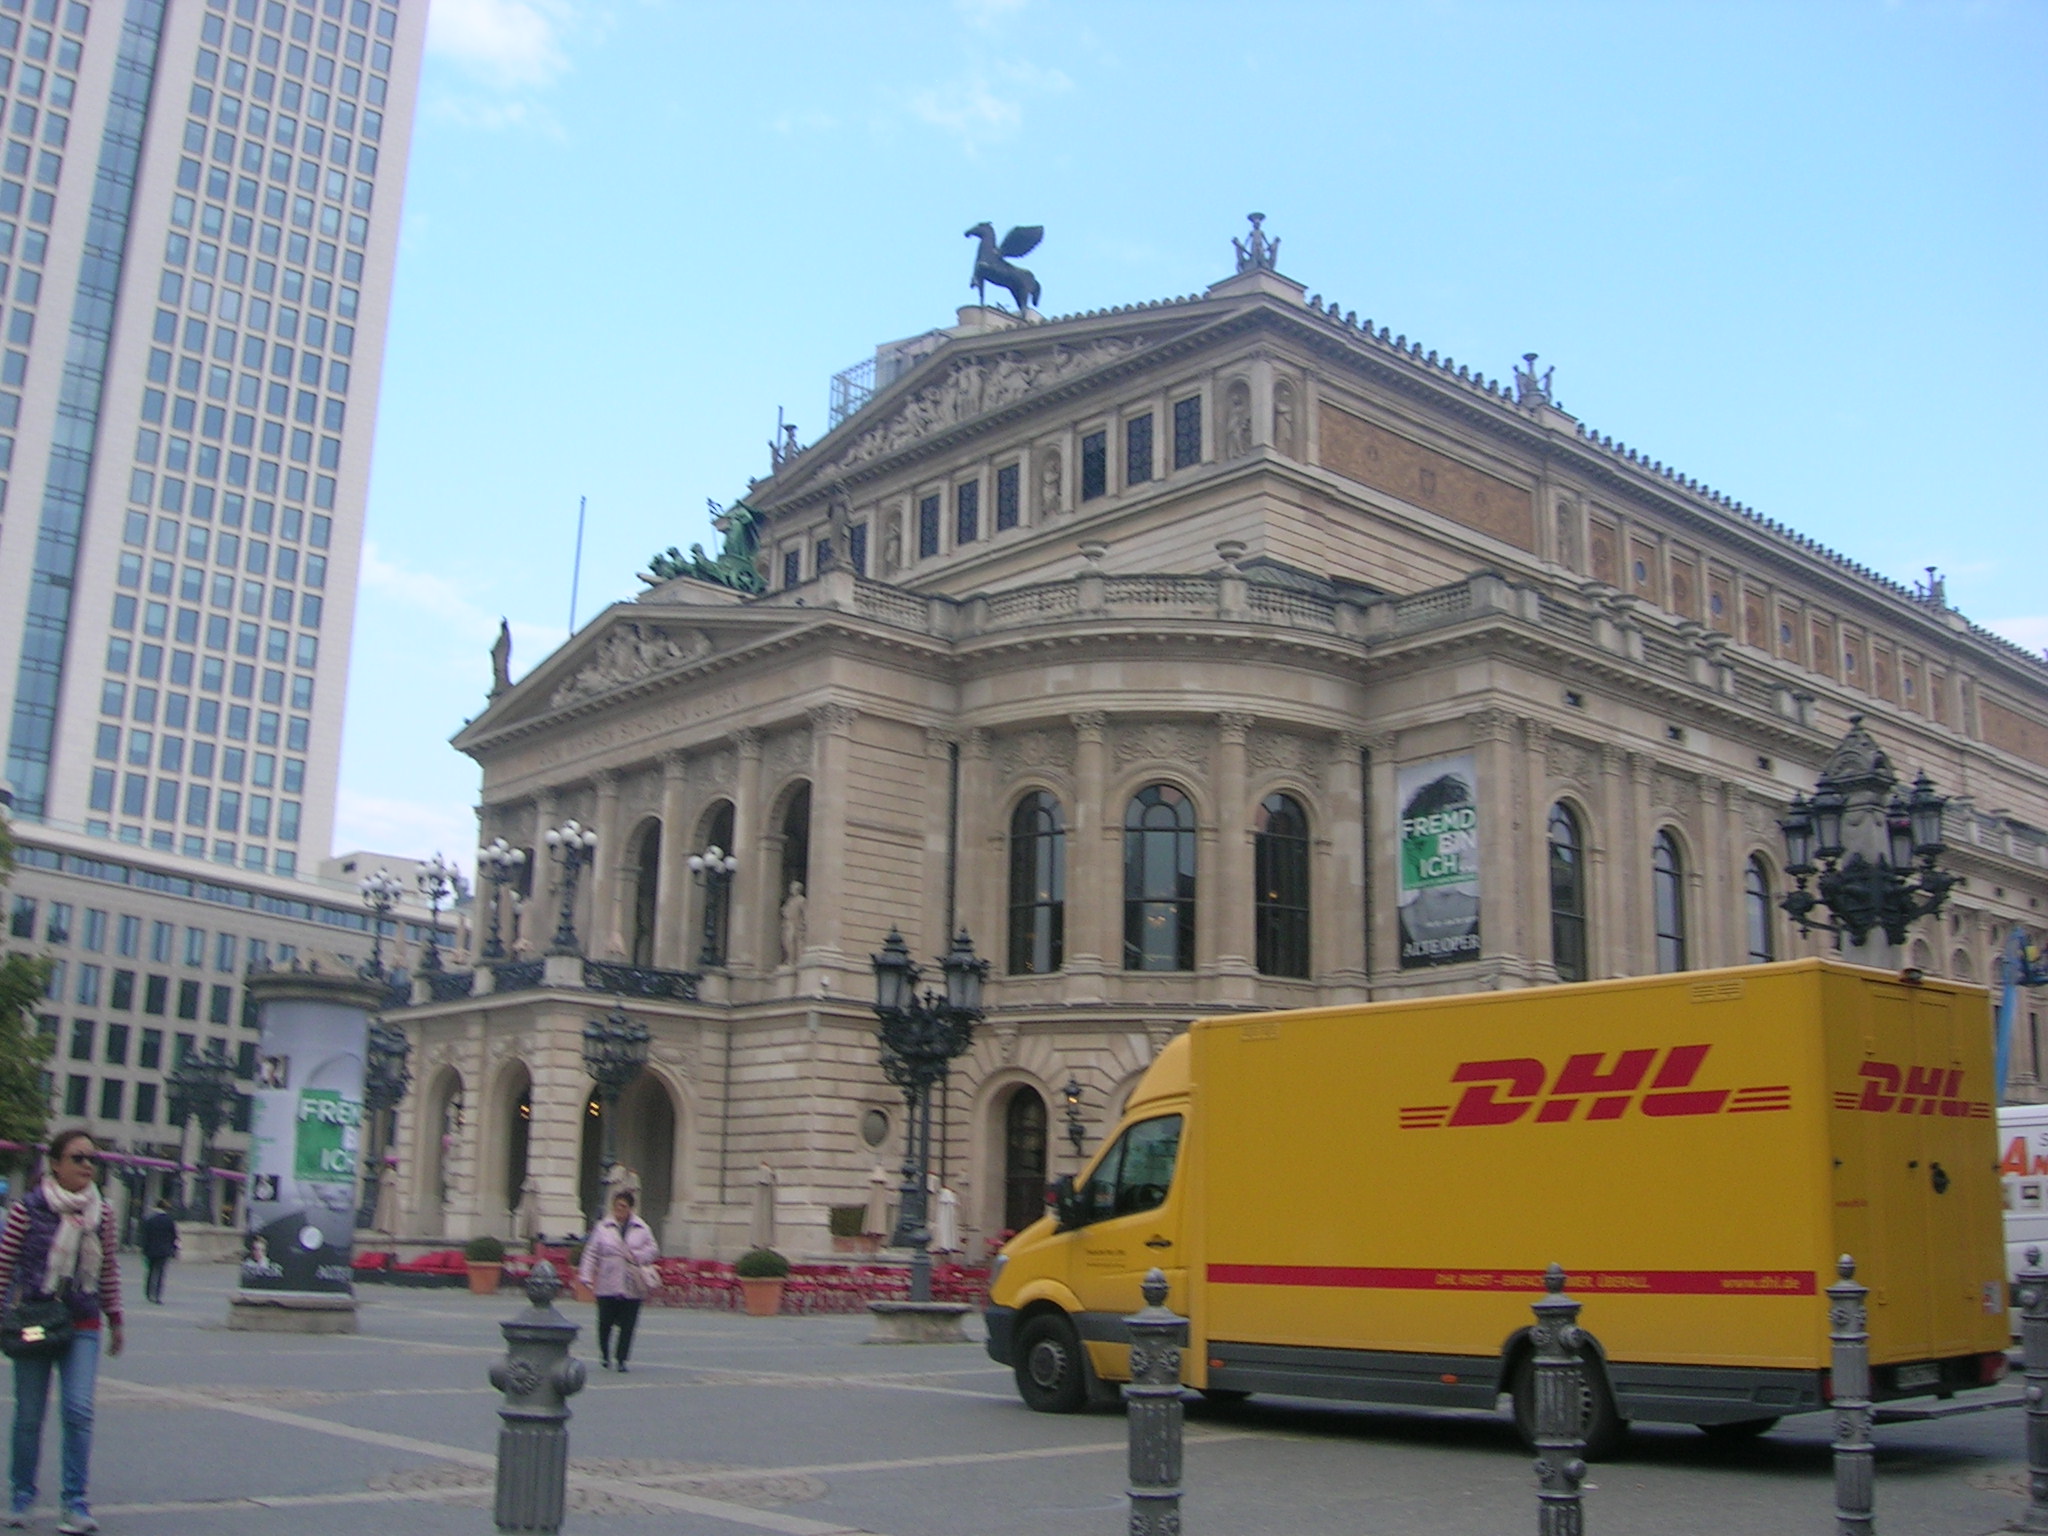 Die Alte Oper